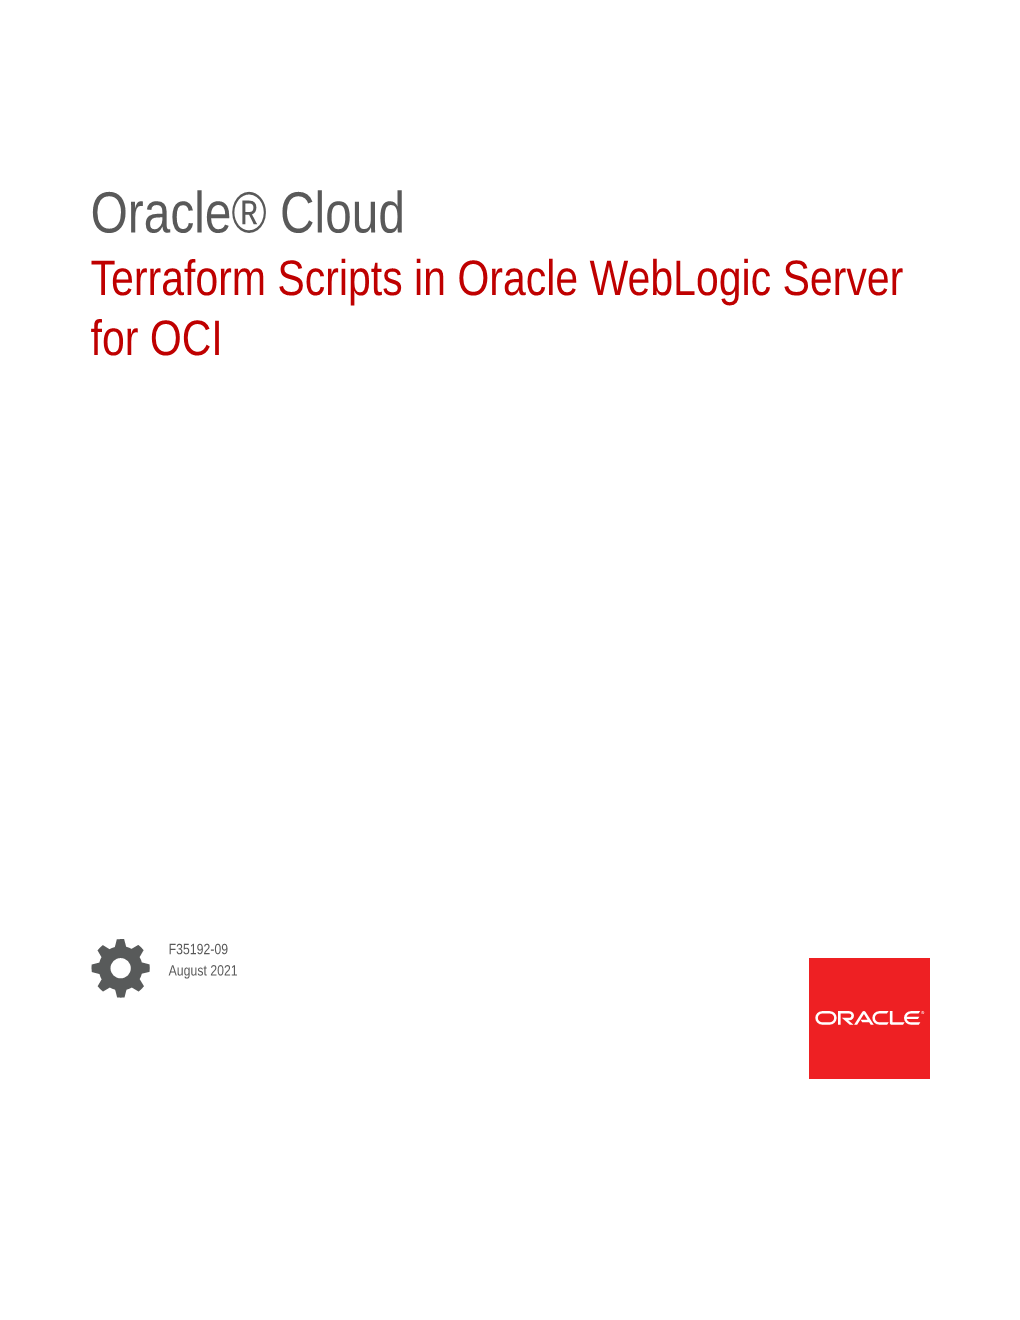 Terraform Scripts in Oracle Weblogic Server for OCI